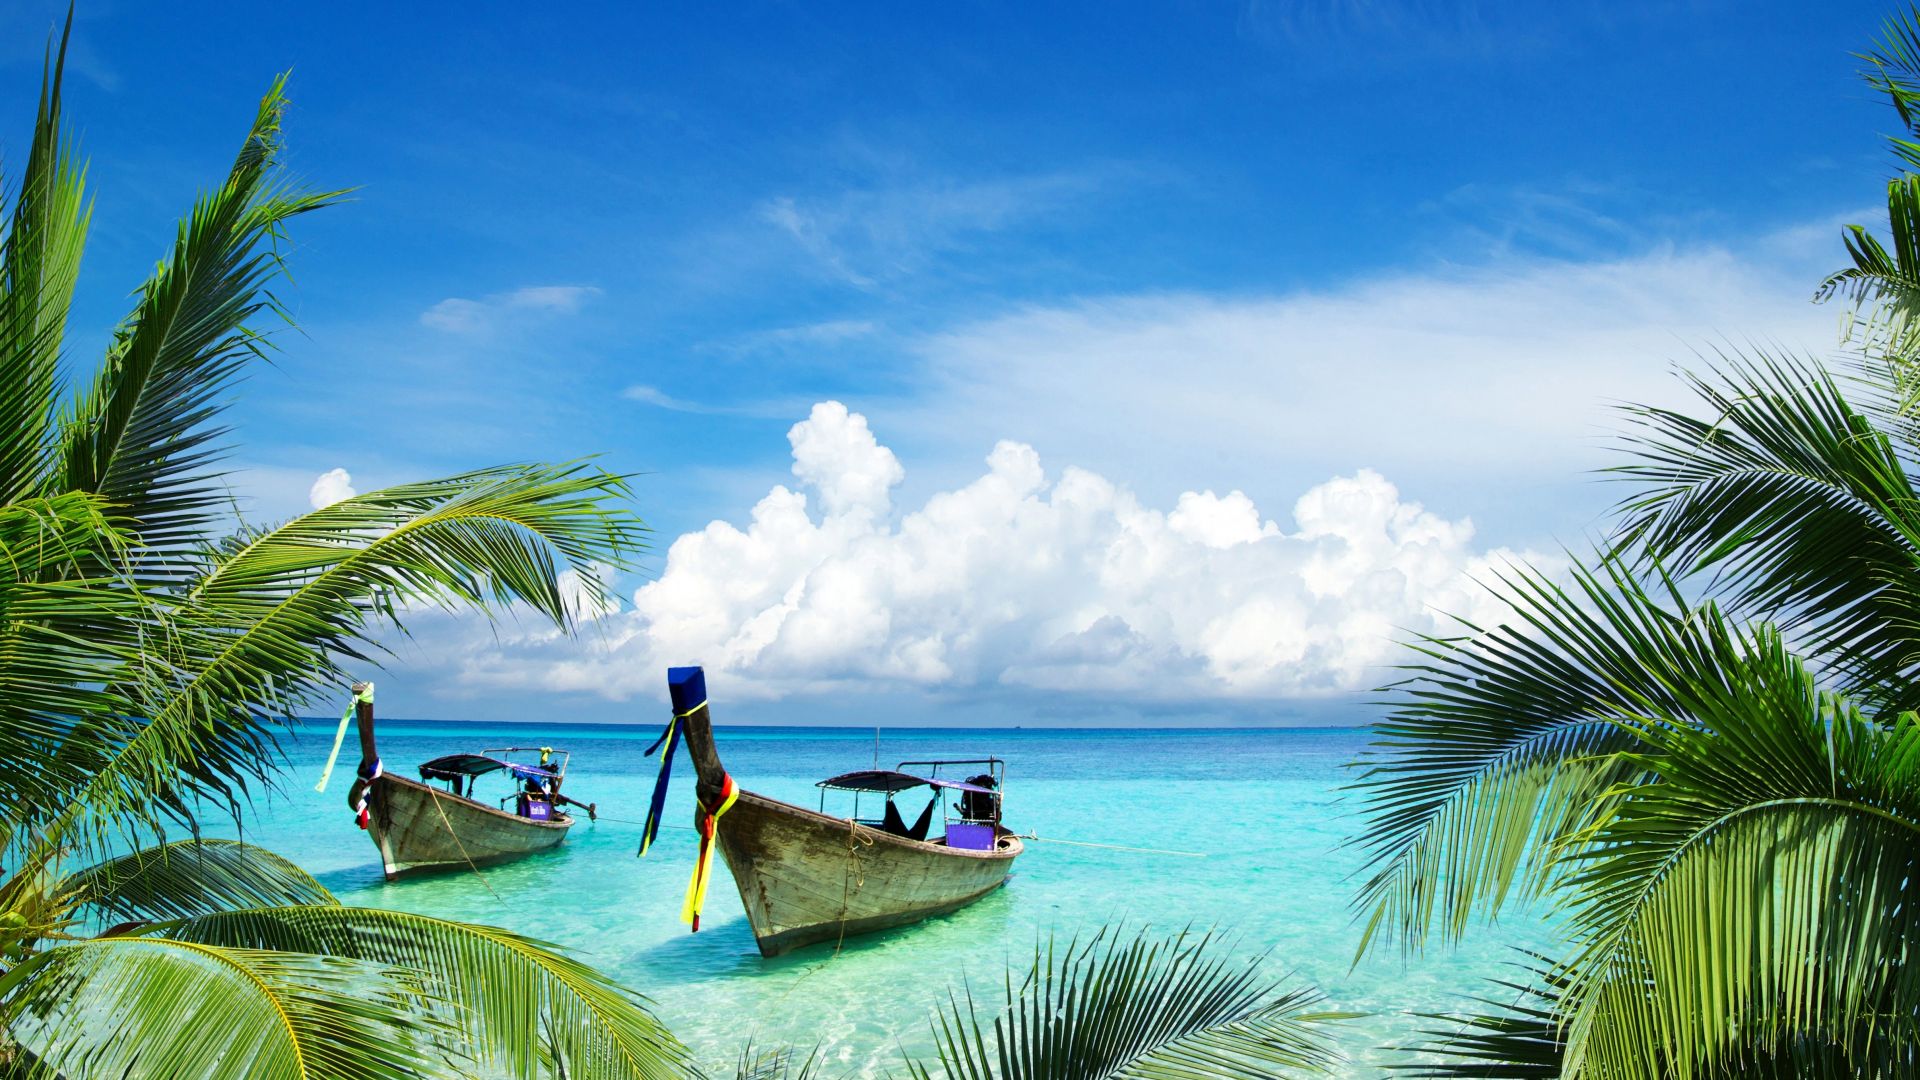 Desktop Wallpaper Tropical Sea Beach, Hd Image, Picture, Background, B Uiuq